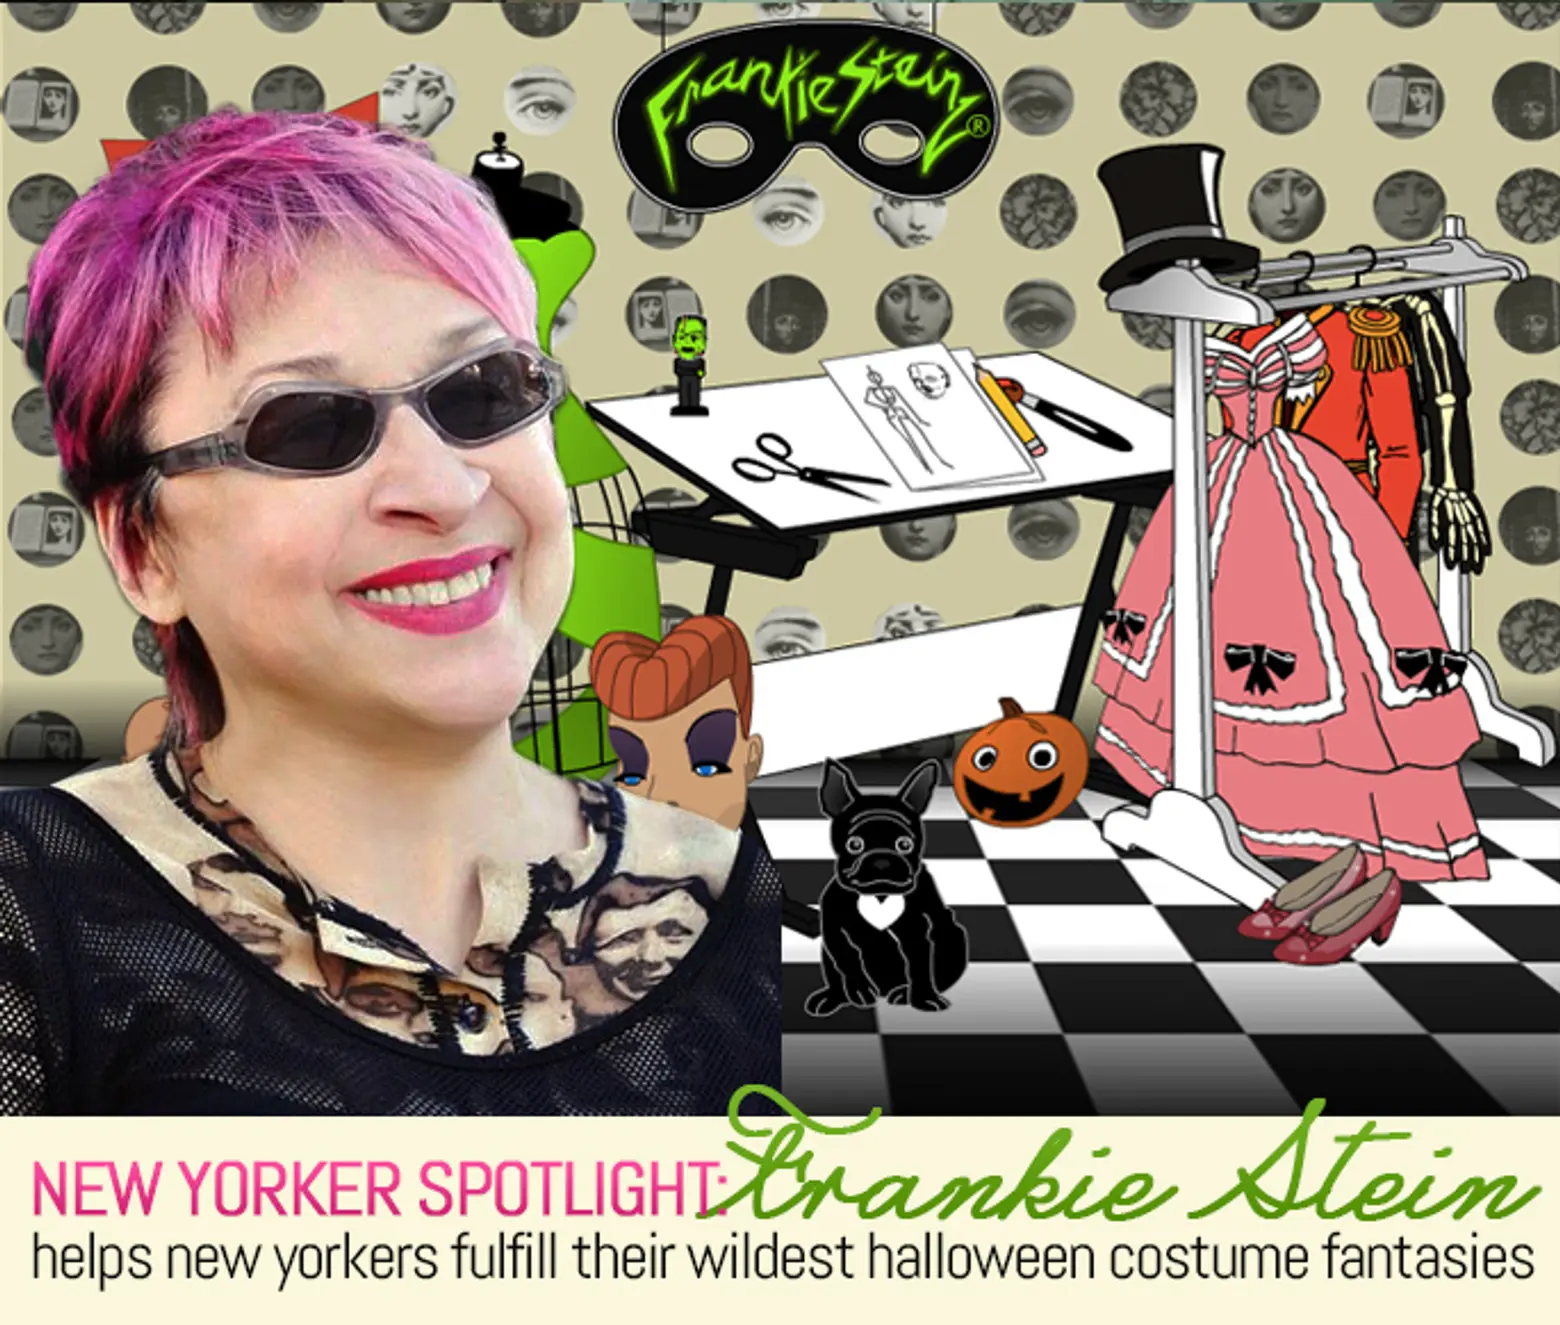 Spotlight: Frankie Stein Helps New Yorkers Fulfill Their Wildest Halloween Costume Fantasies